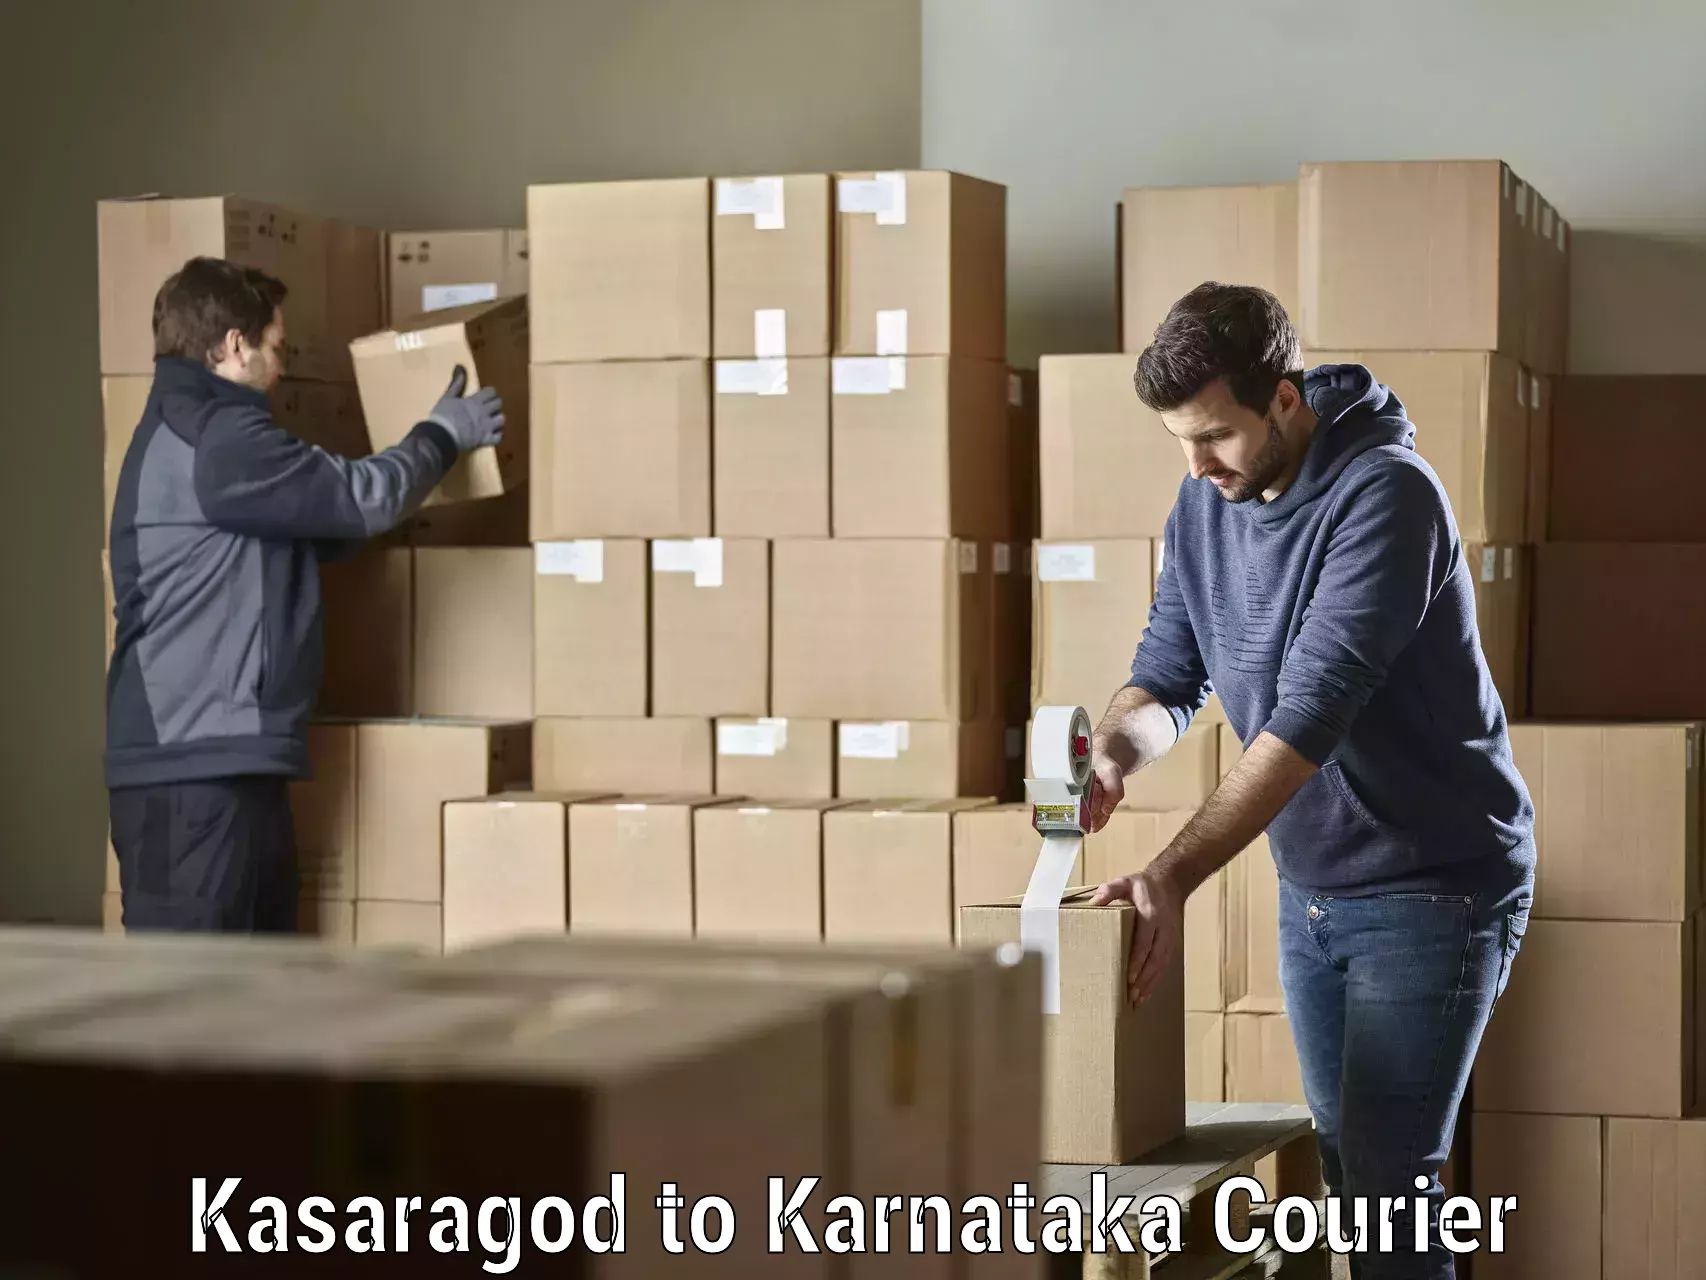 Professional courier handling Kasaragod to Karwar